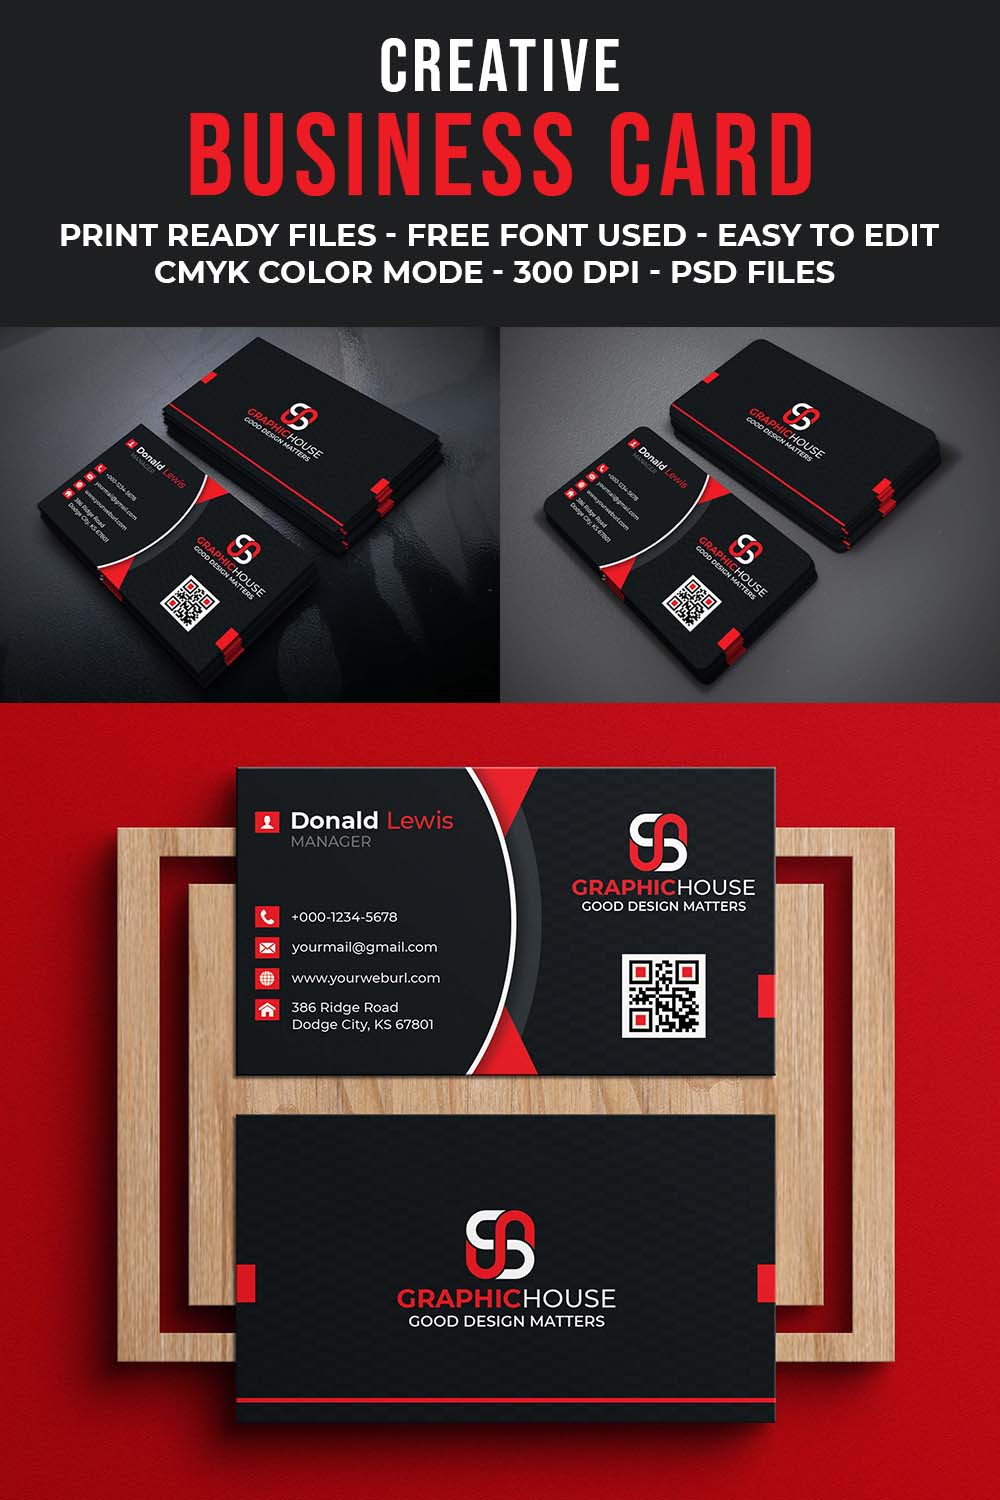 pinterest image Creative Professional Business Card Template CMYK Mode